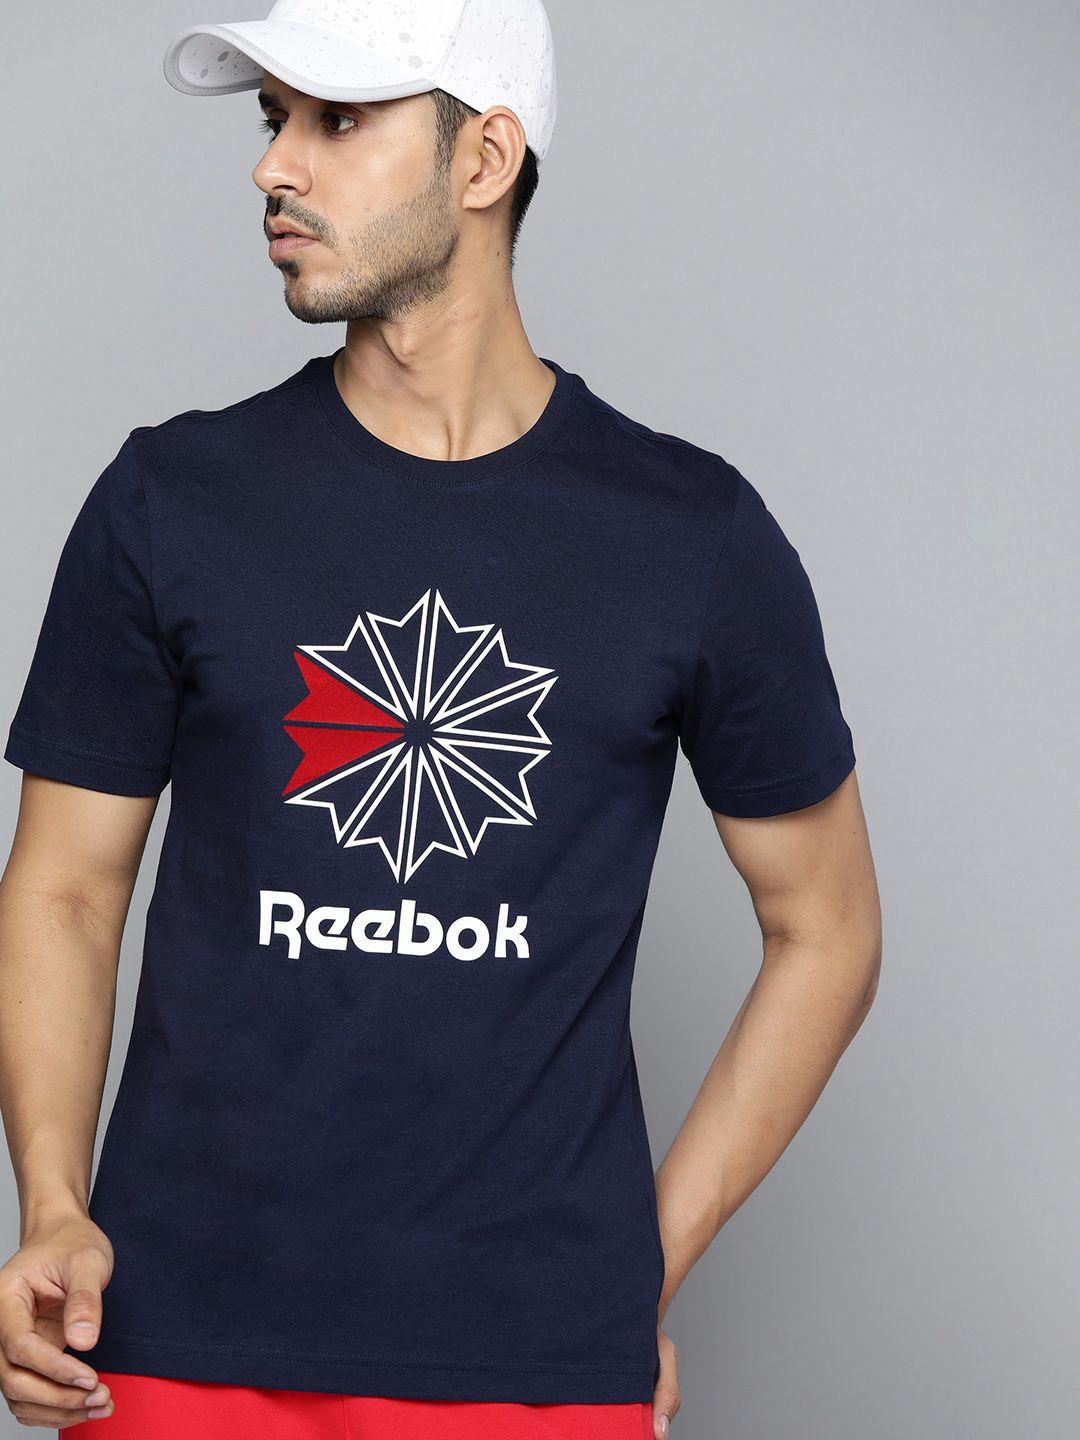 reebok classic unisex navy blue & white pure cotton brand logo printed t-shirt